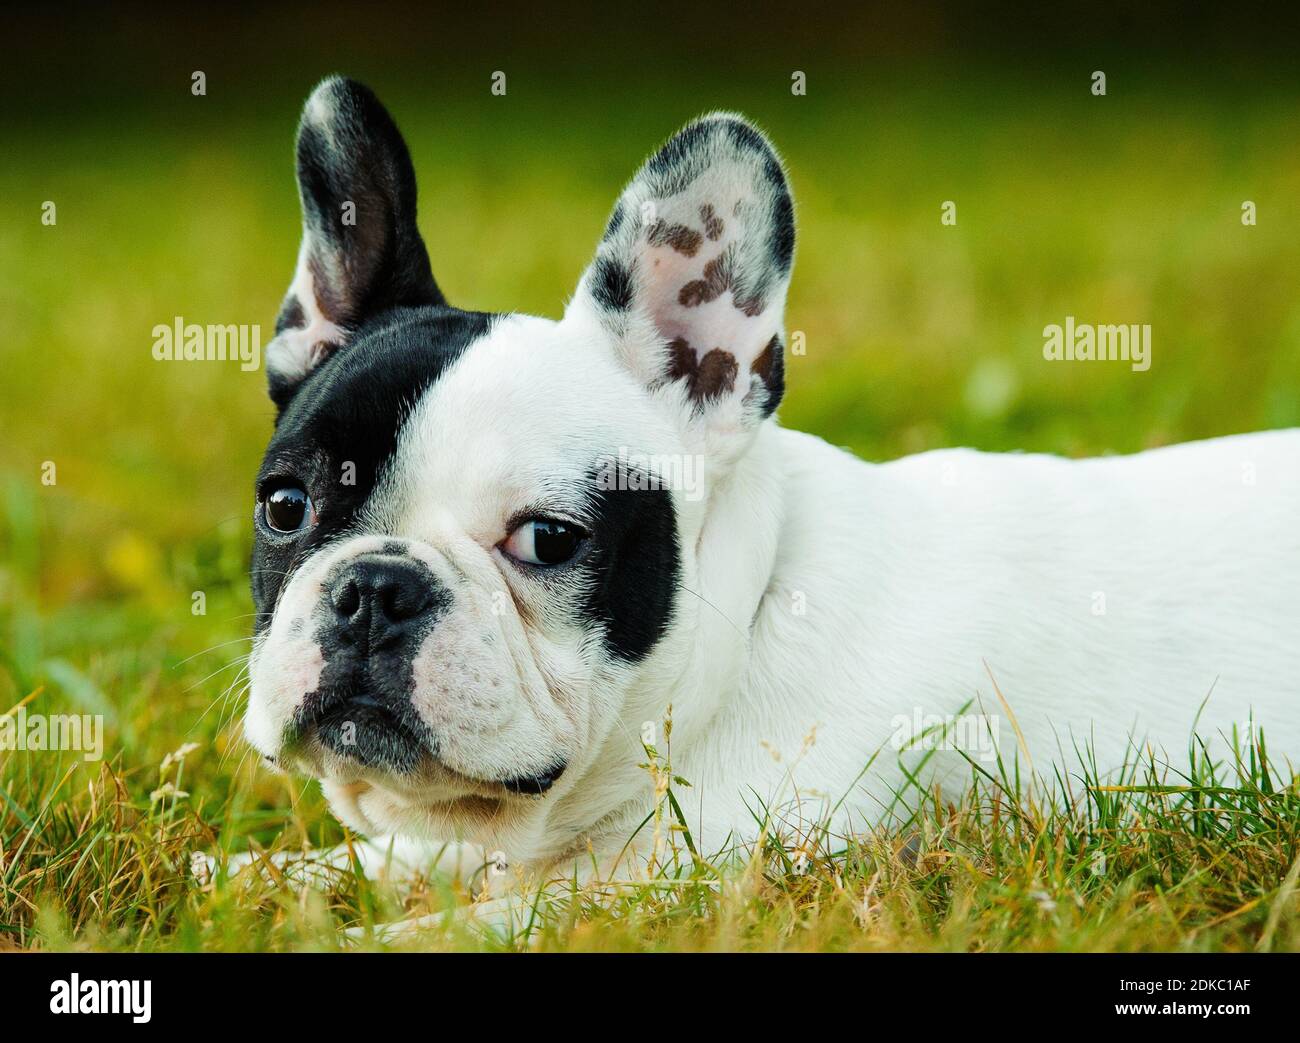 Close-up Portrait Of Dog Sitting On Grassy Field Stock Photo